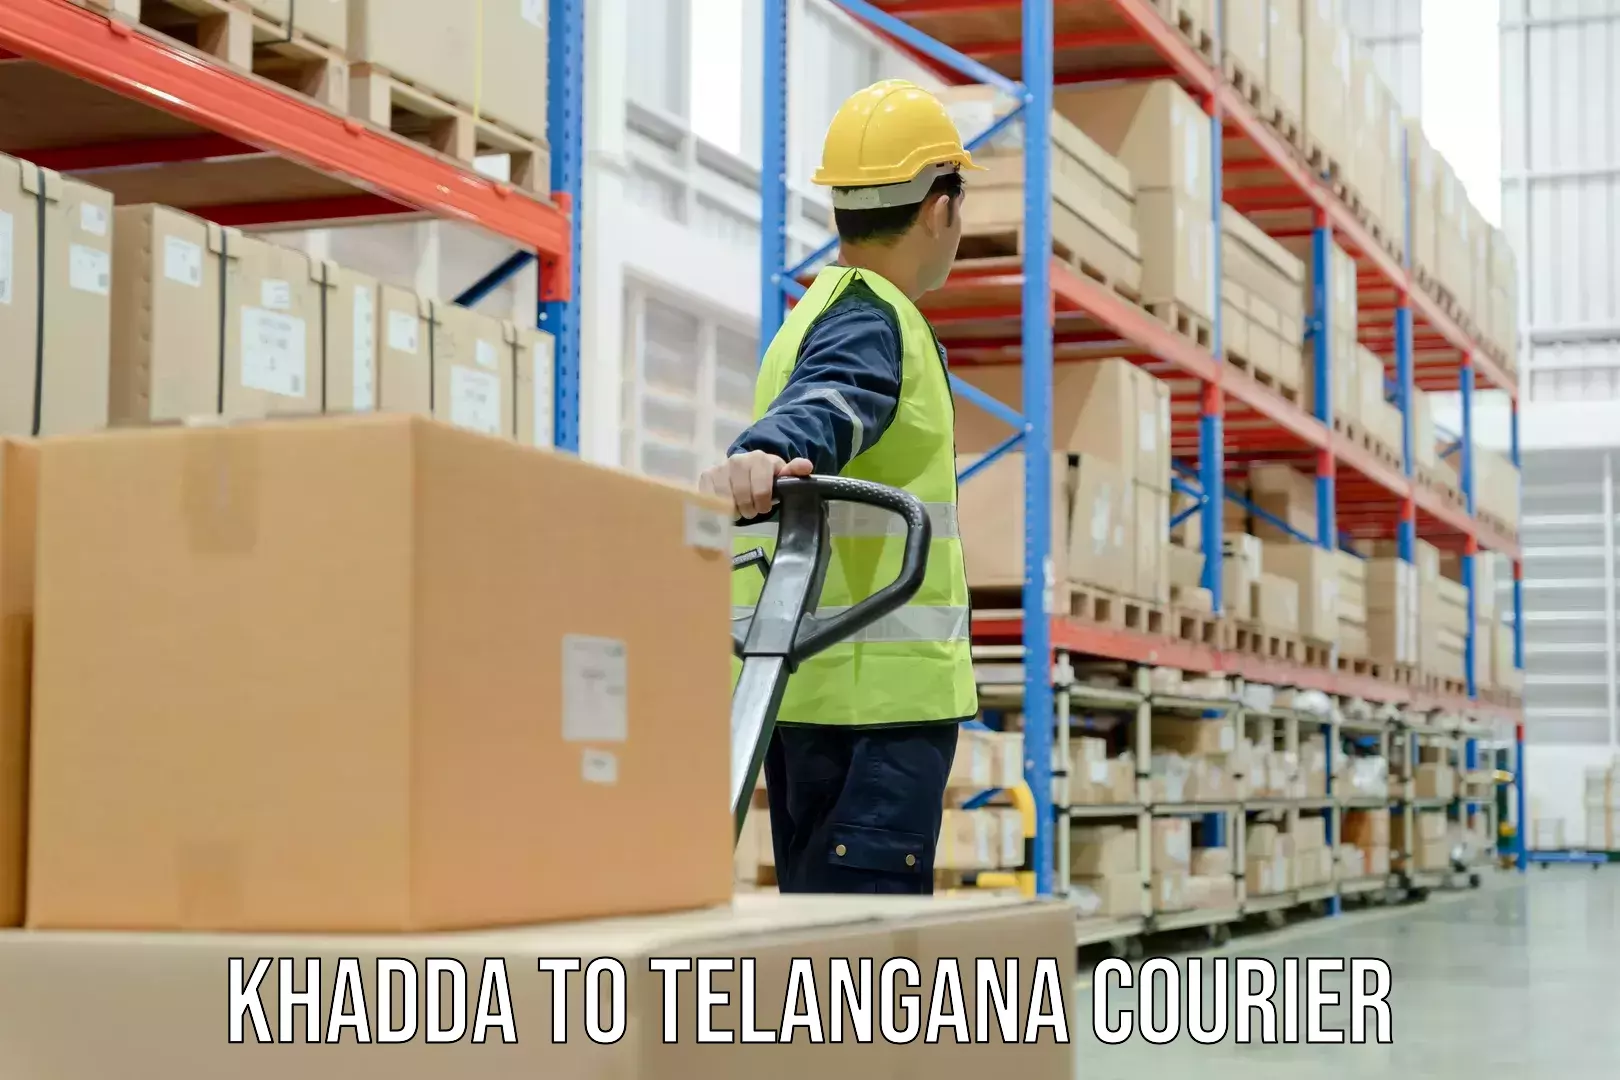 Shipping and handling in Khadda to Hyderabad